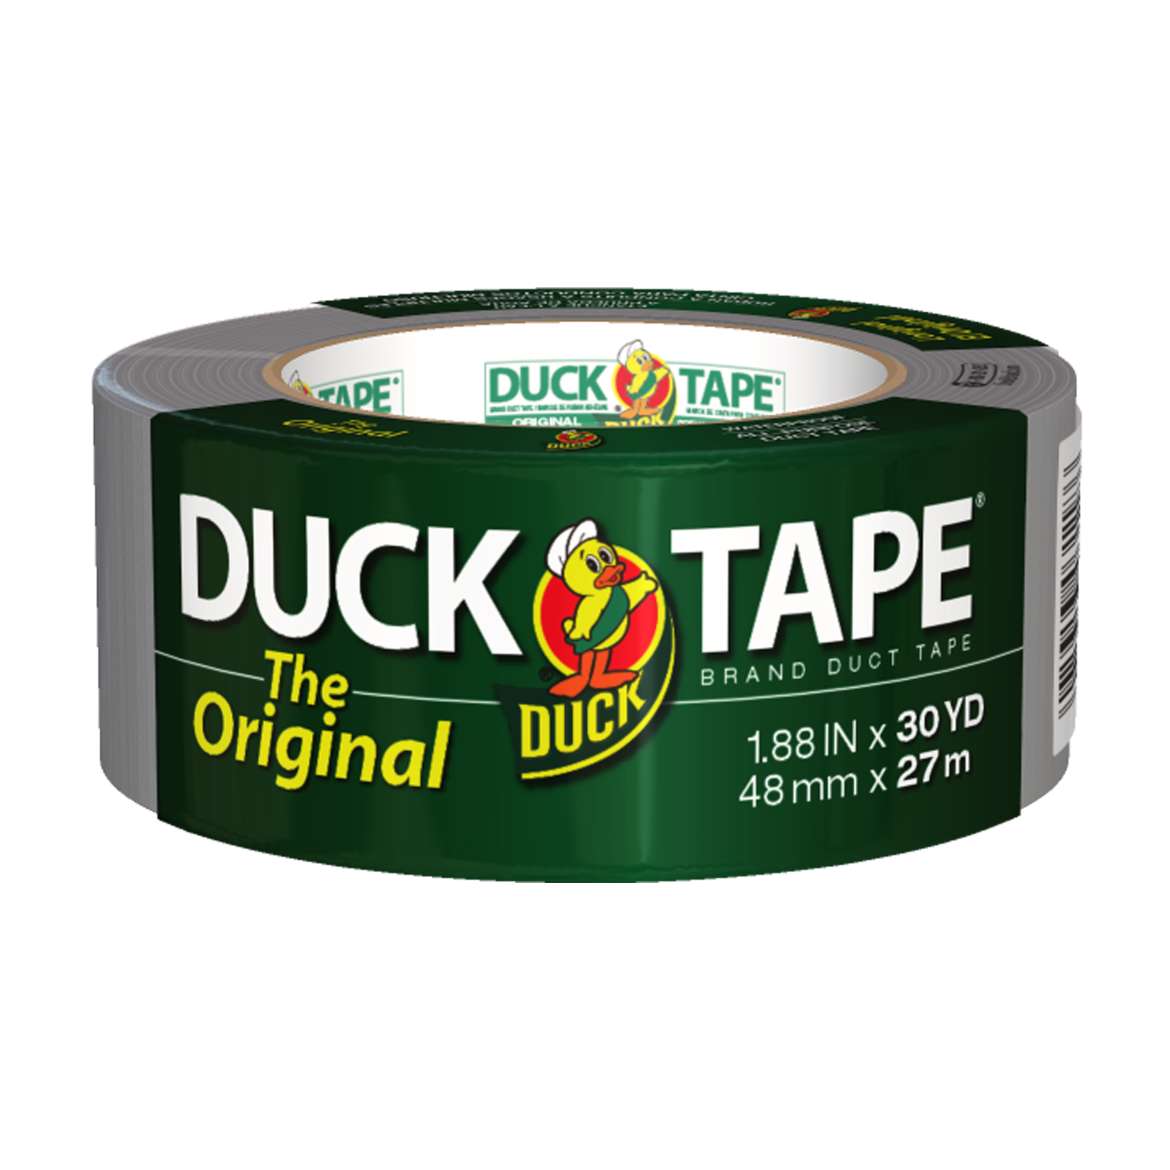 Duck Brand Original All-Purpose Duct Tape